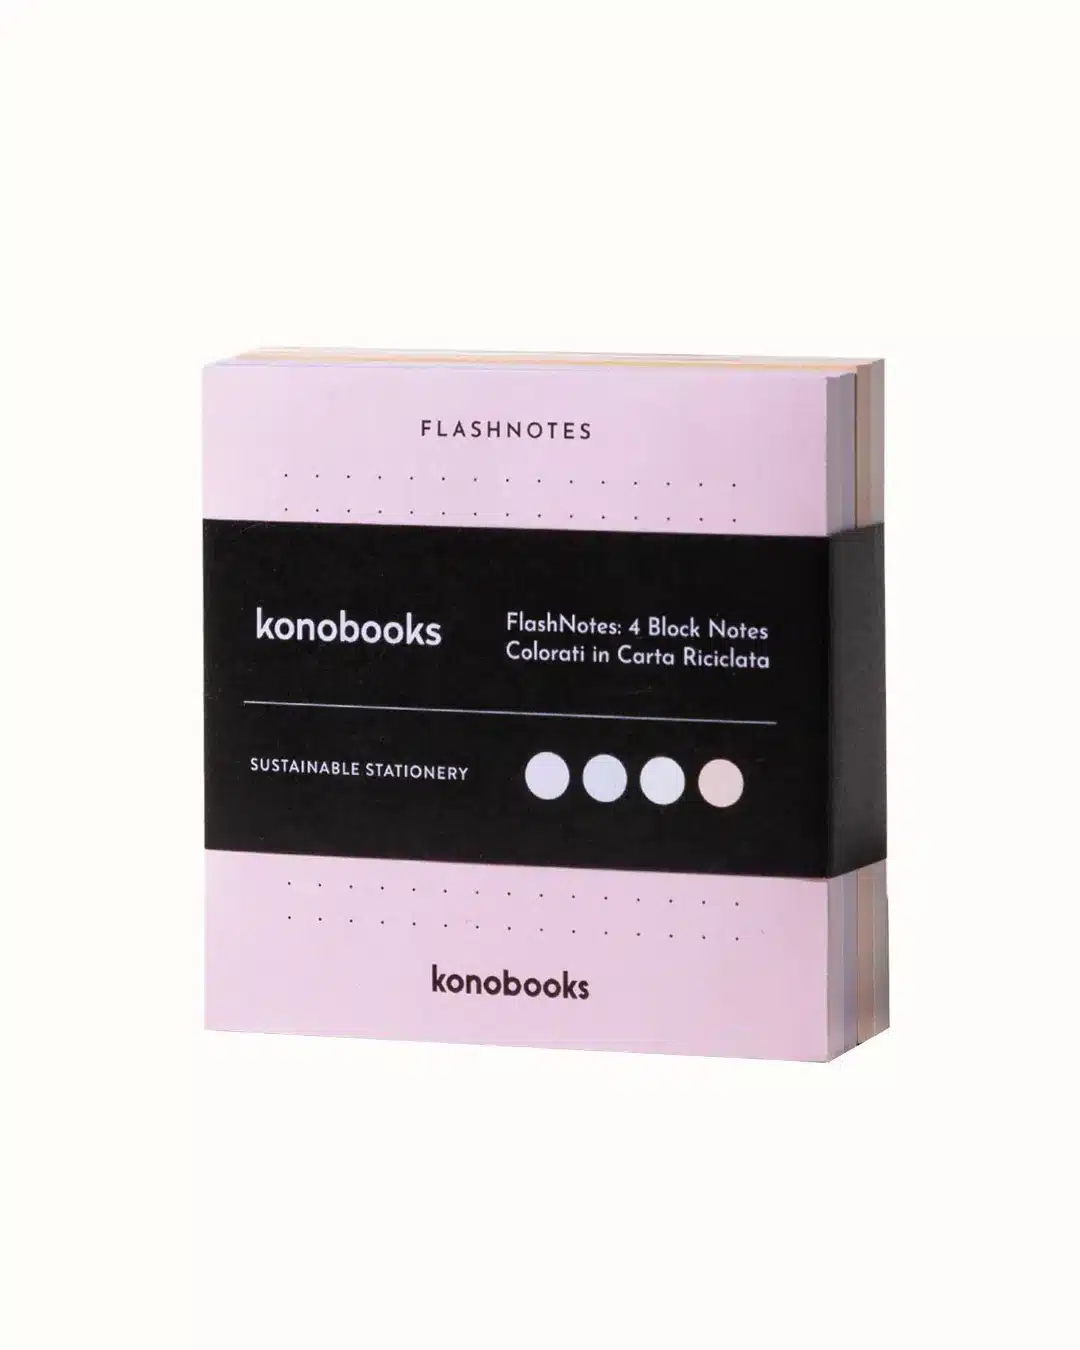 FleckO  Quaderno Puntinato in carta riciclata - Konobooks - Mangrovia